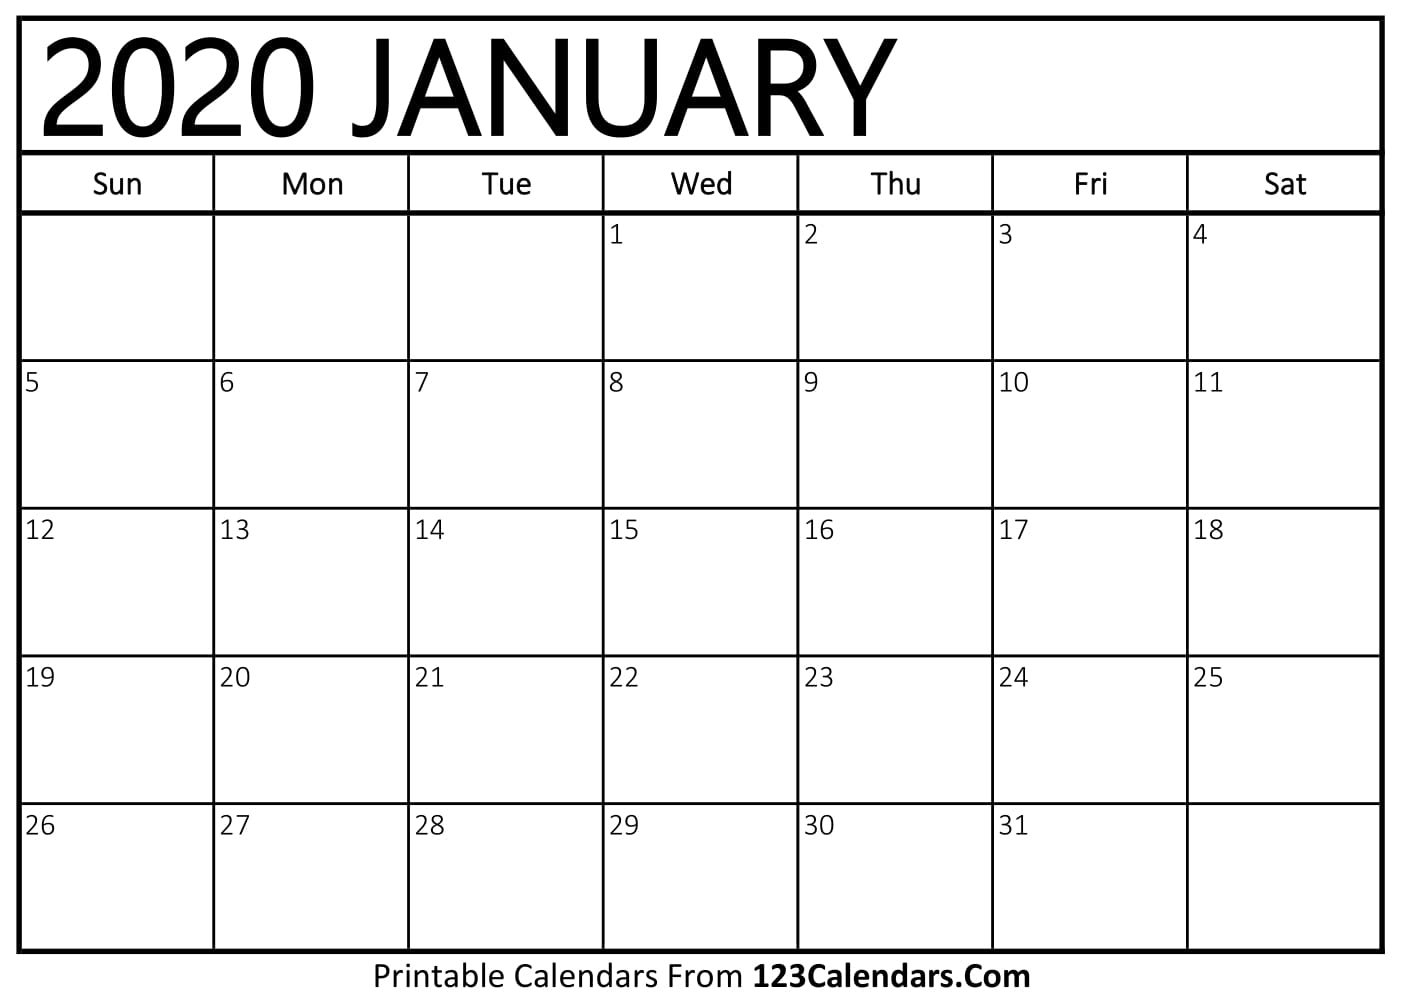 January 2020 Printable Calendar | 123Calendars throughout 123 Calendars January 2020